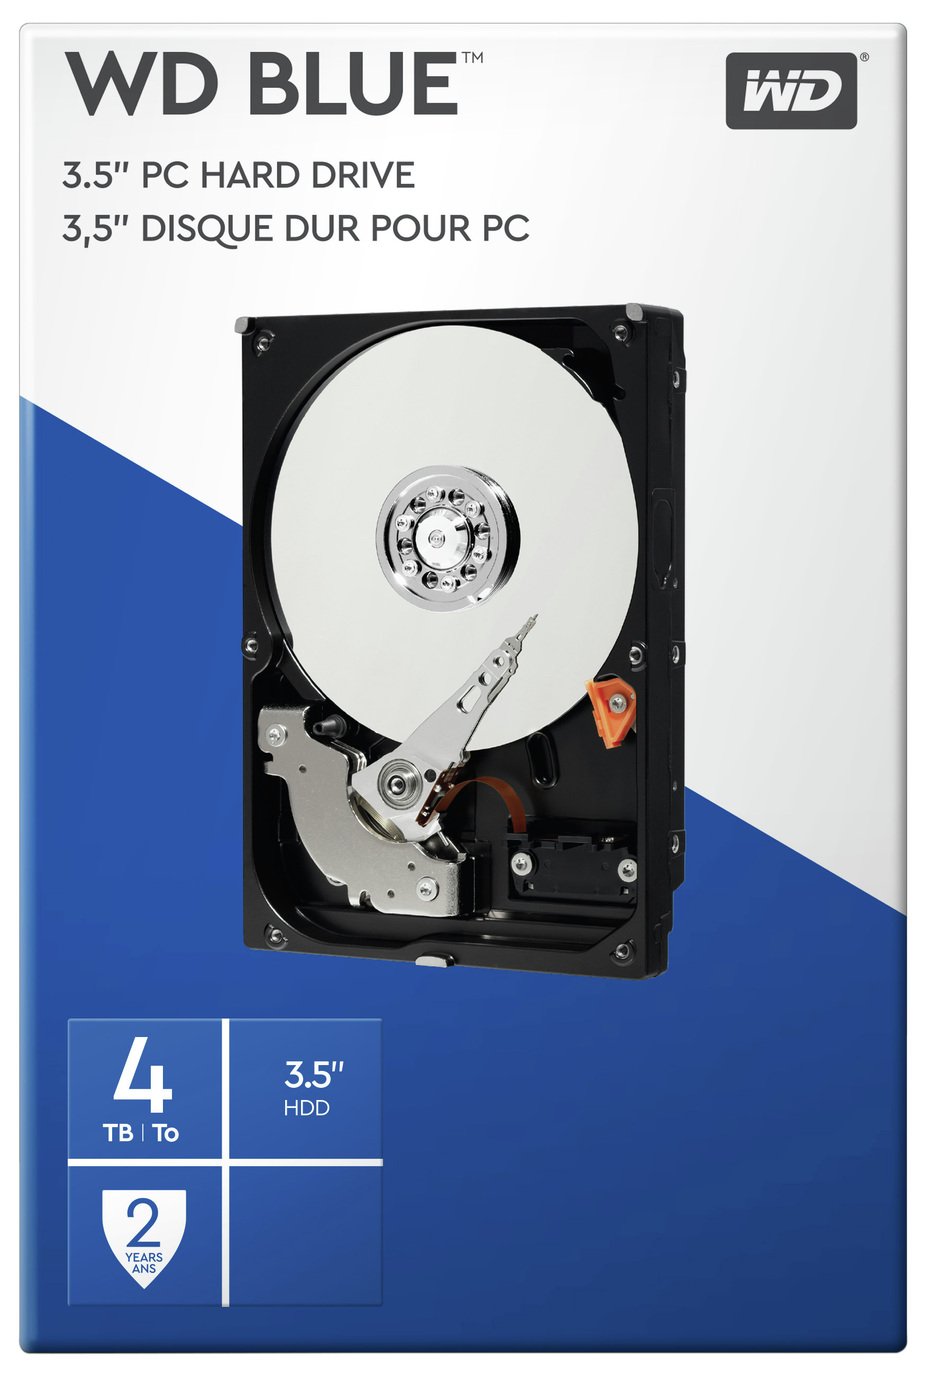 WD Blue 4TB Desktop Hard Drive Review